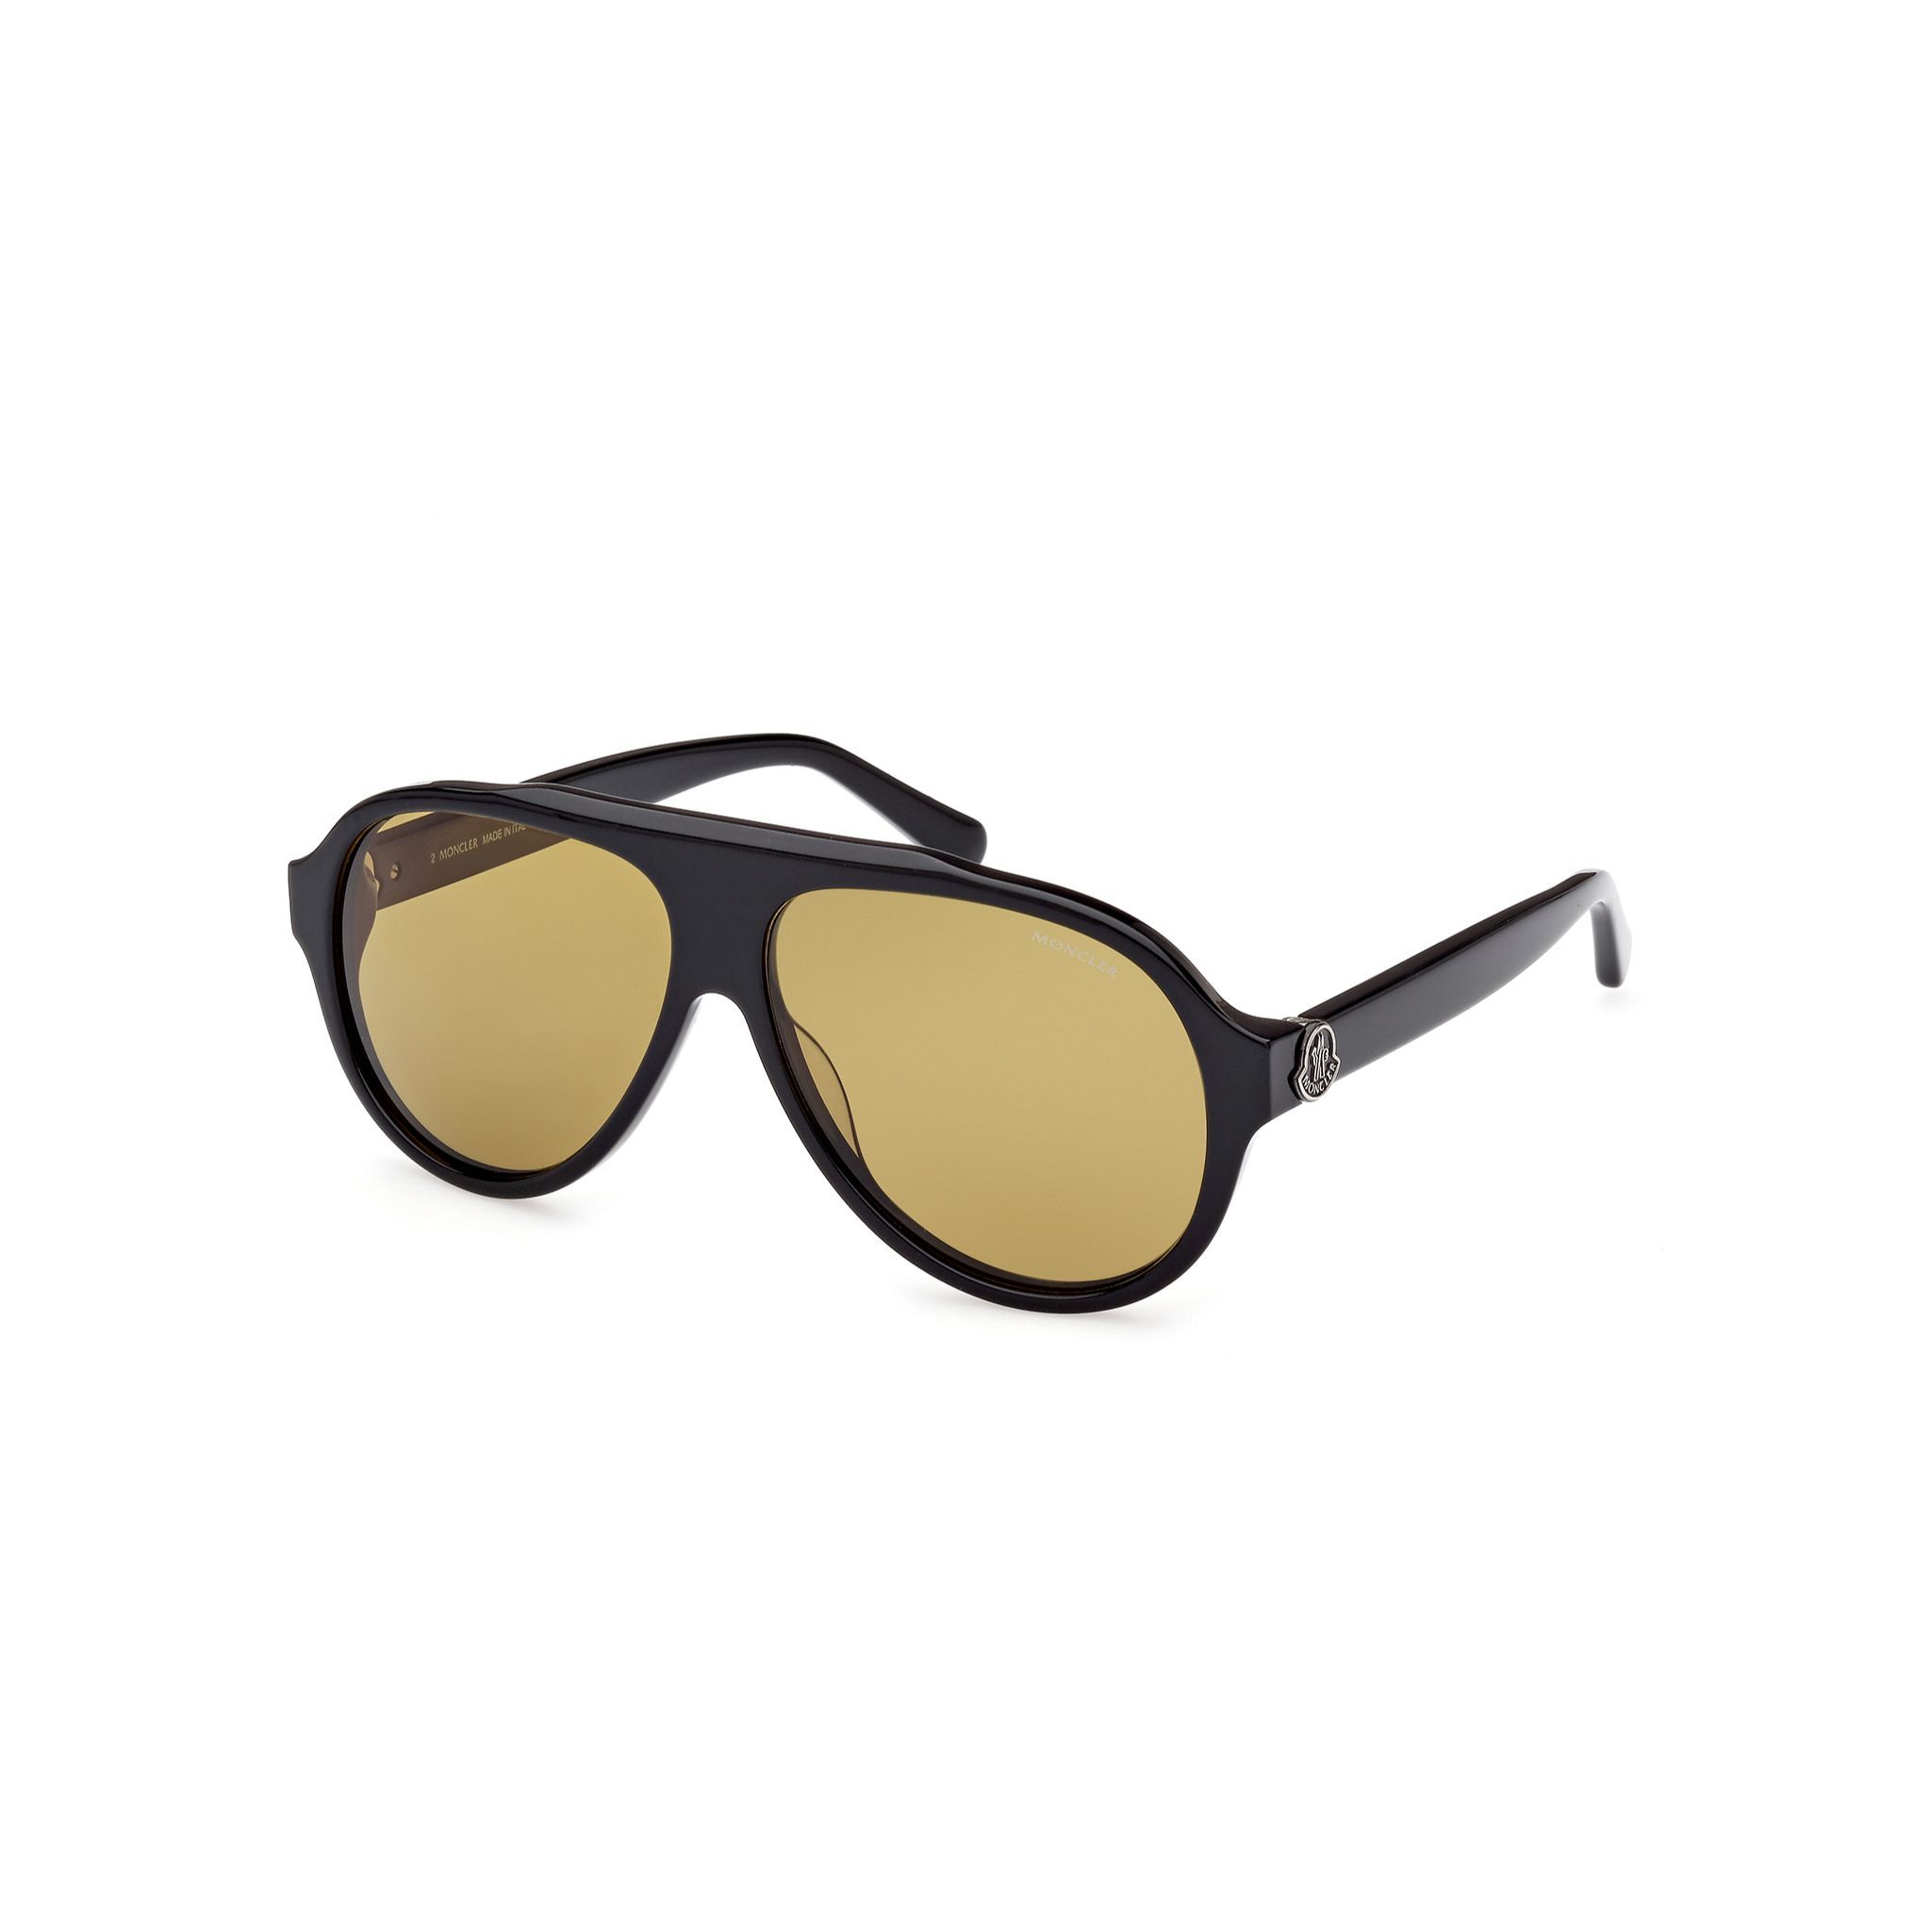 ML0265 Pilot Sunglasses 1H - size 59